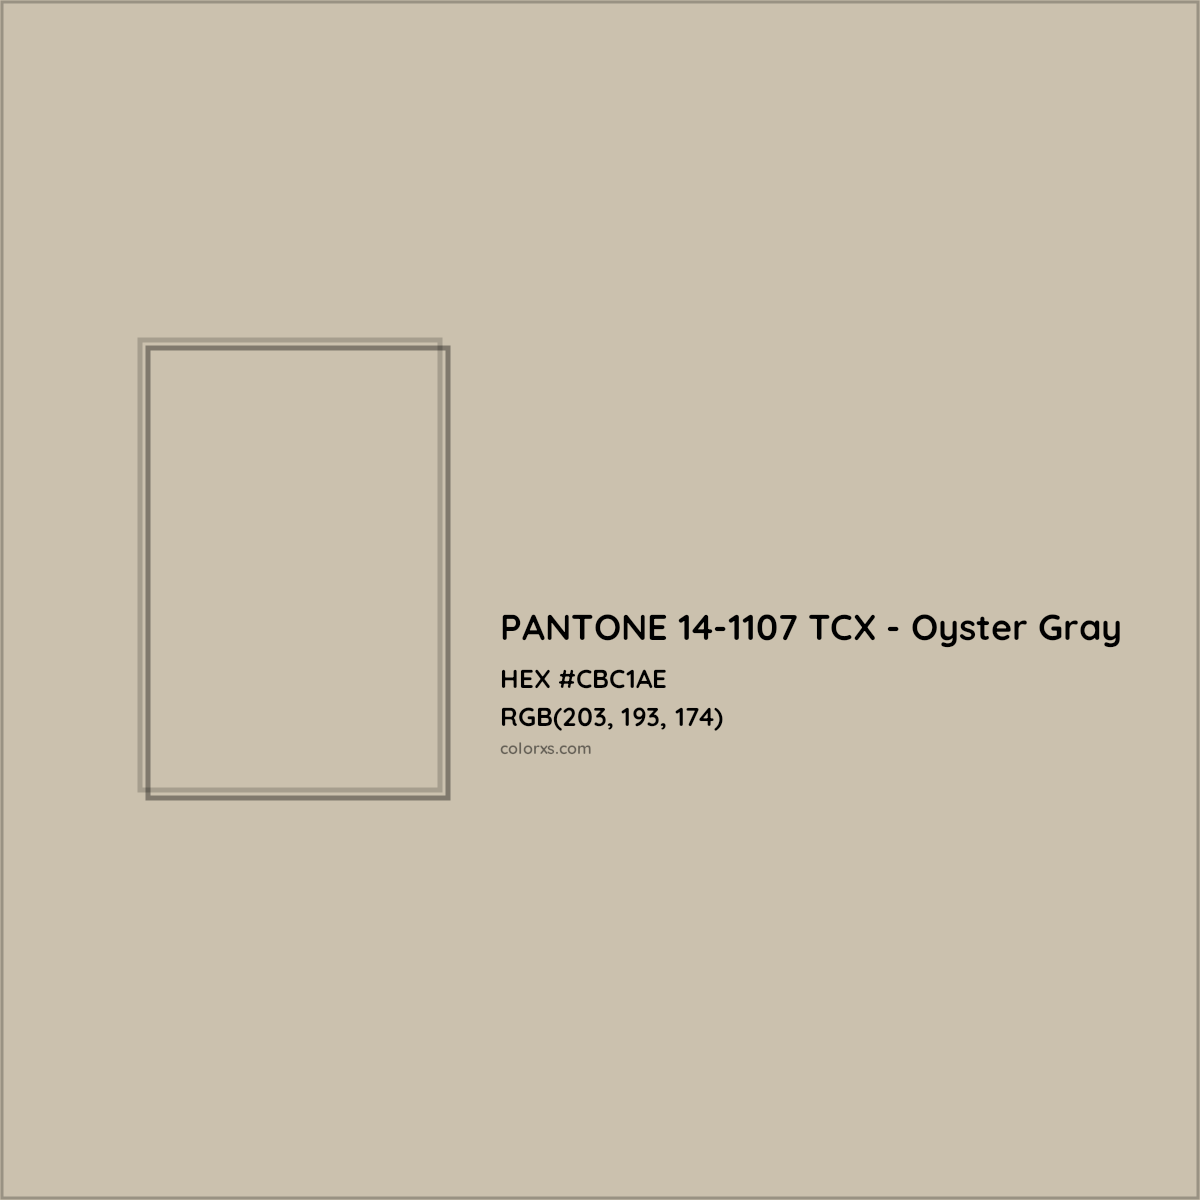 HEX #CBC1AE PANTONE 14-1107 TCX - Oyster Gray CMS Pantone TCX - Color Code